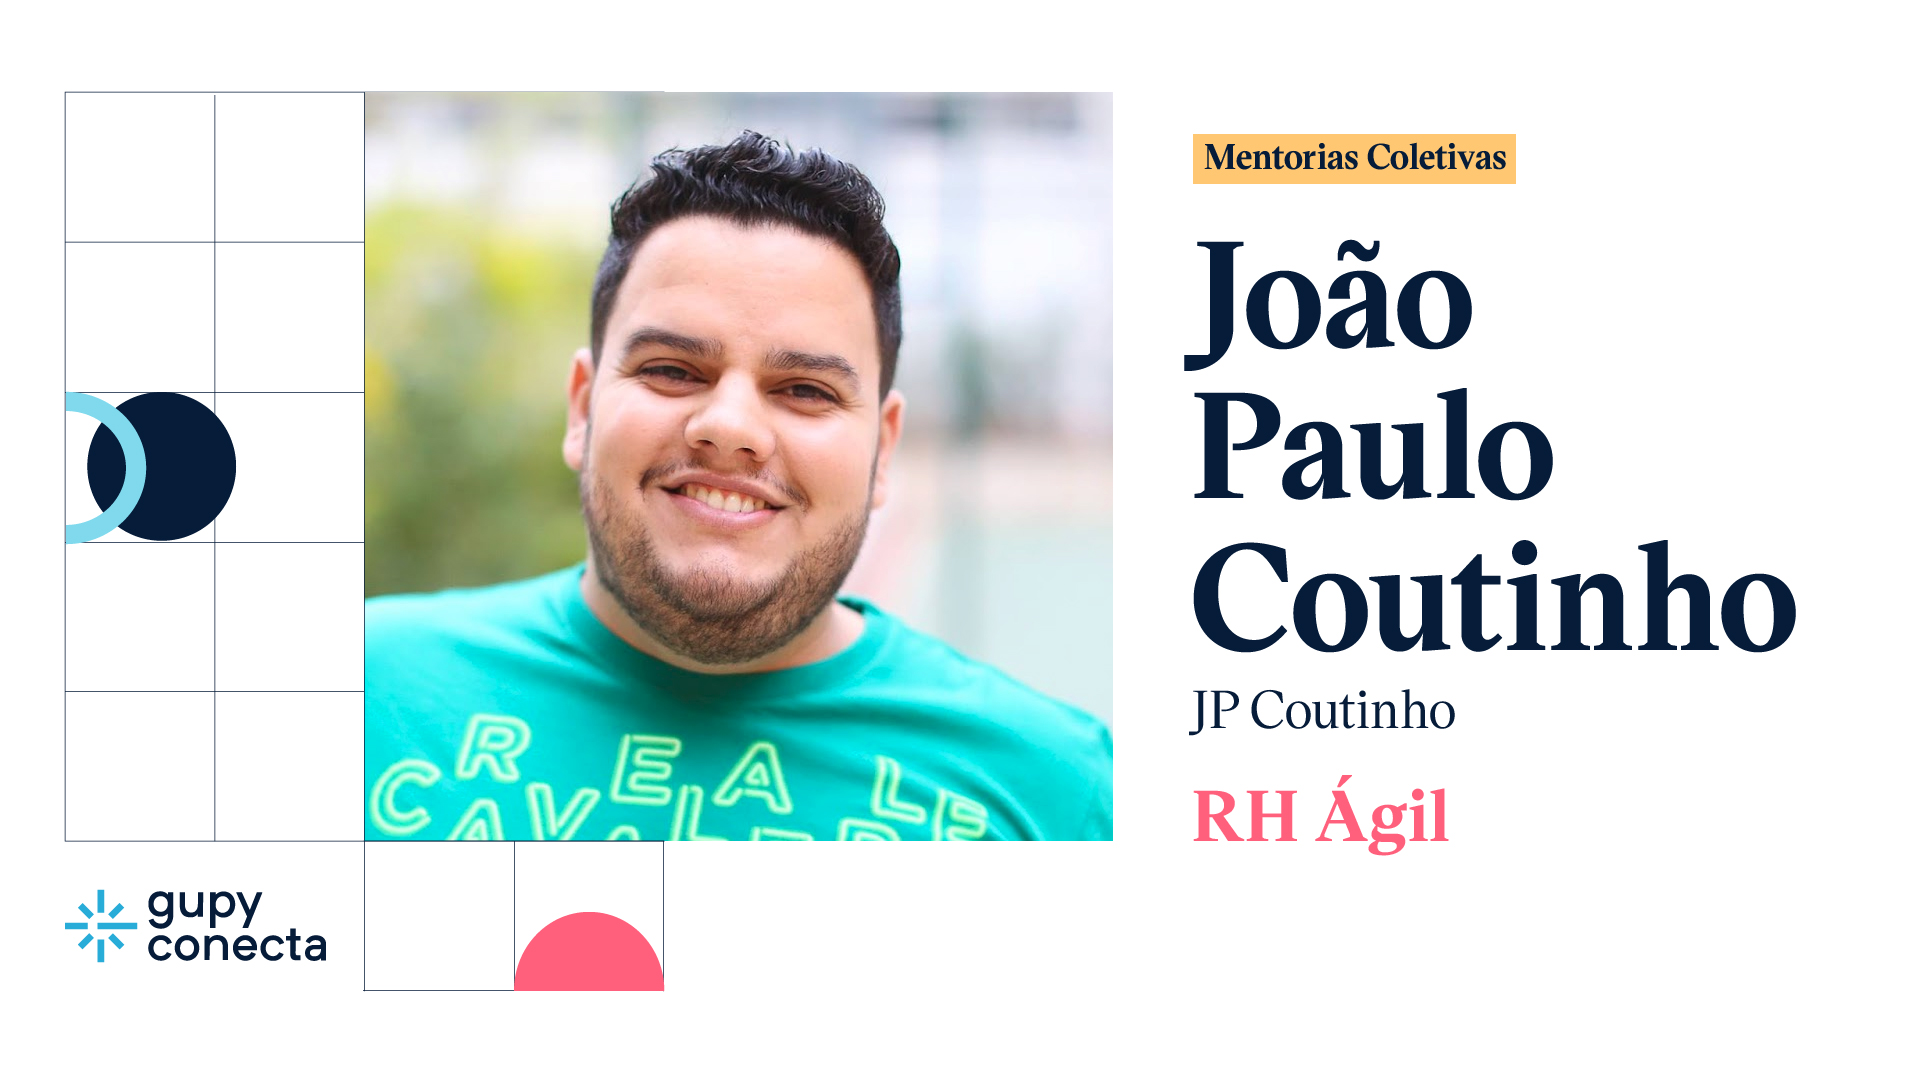 João Paulo Coutinho